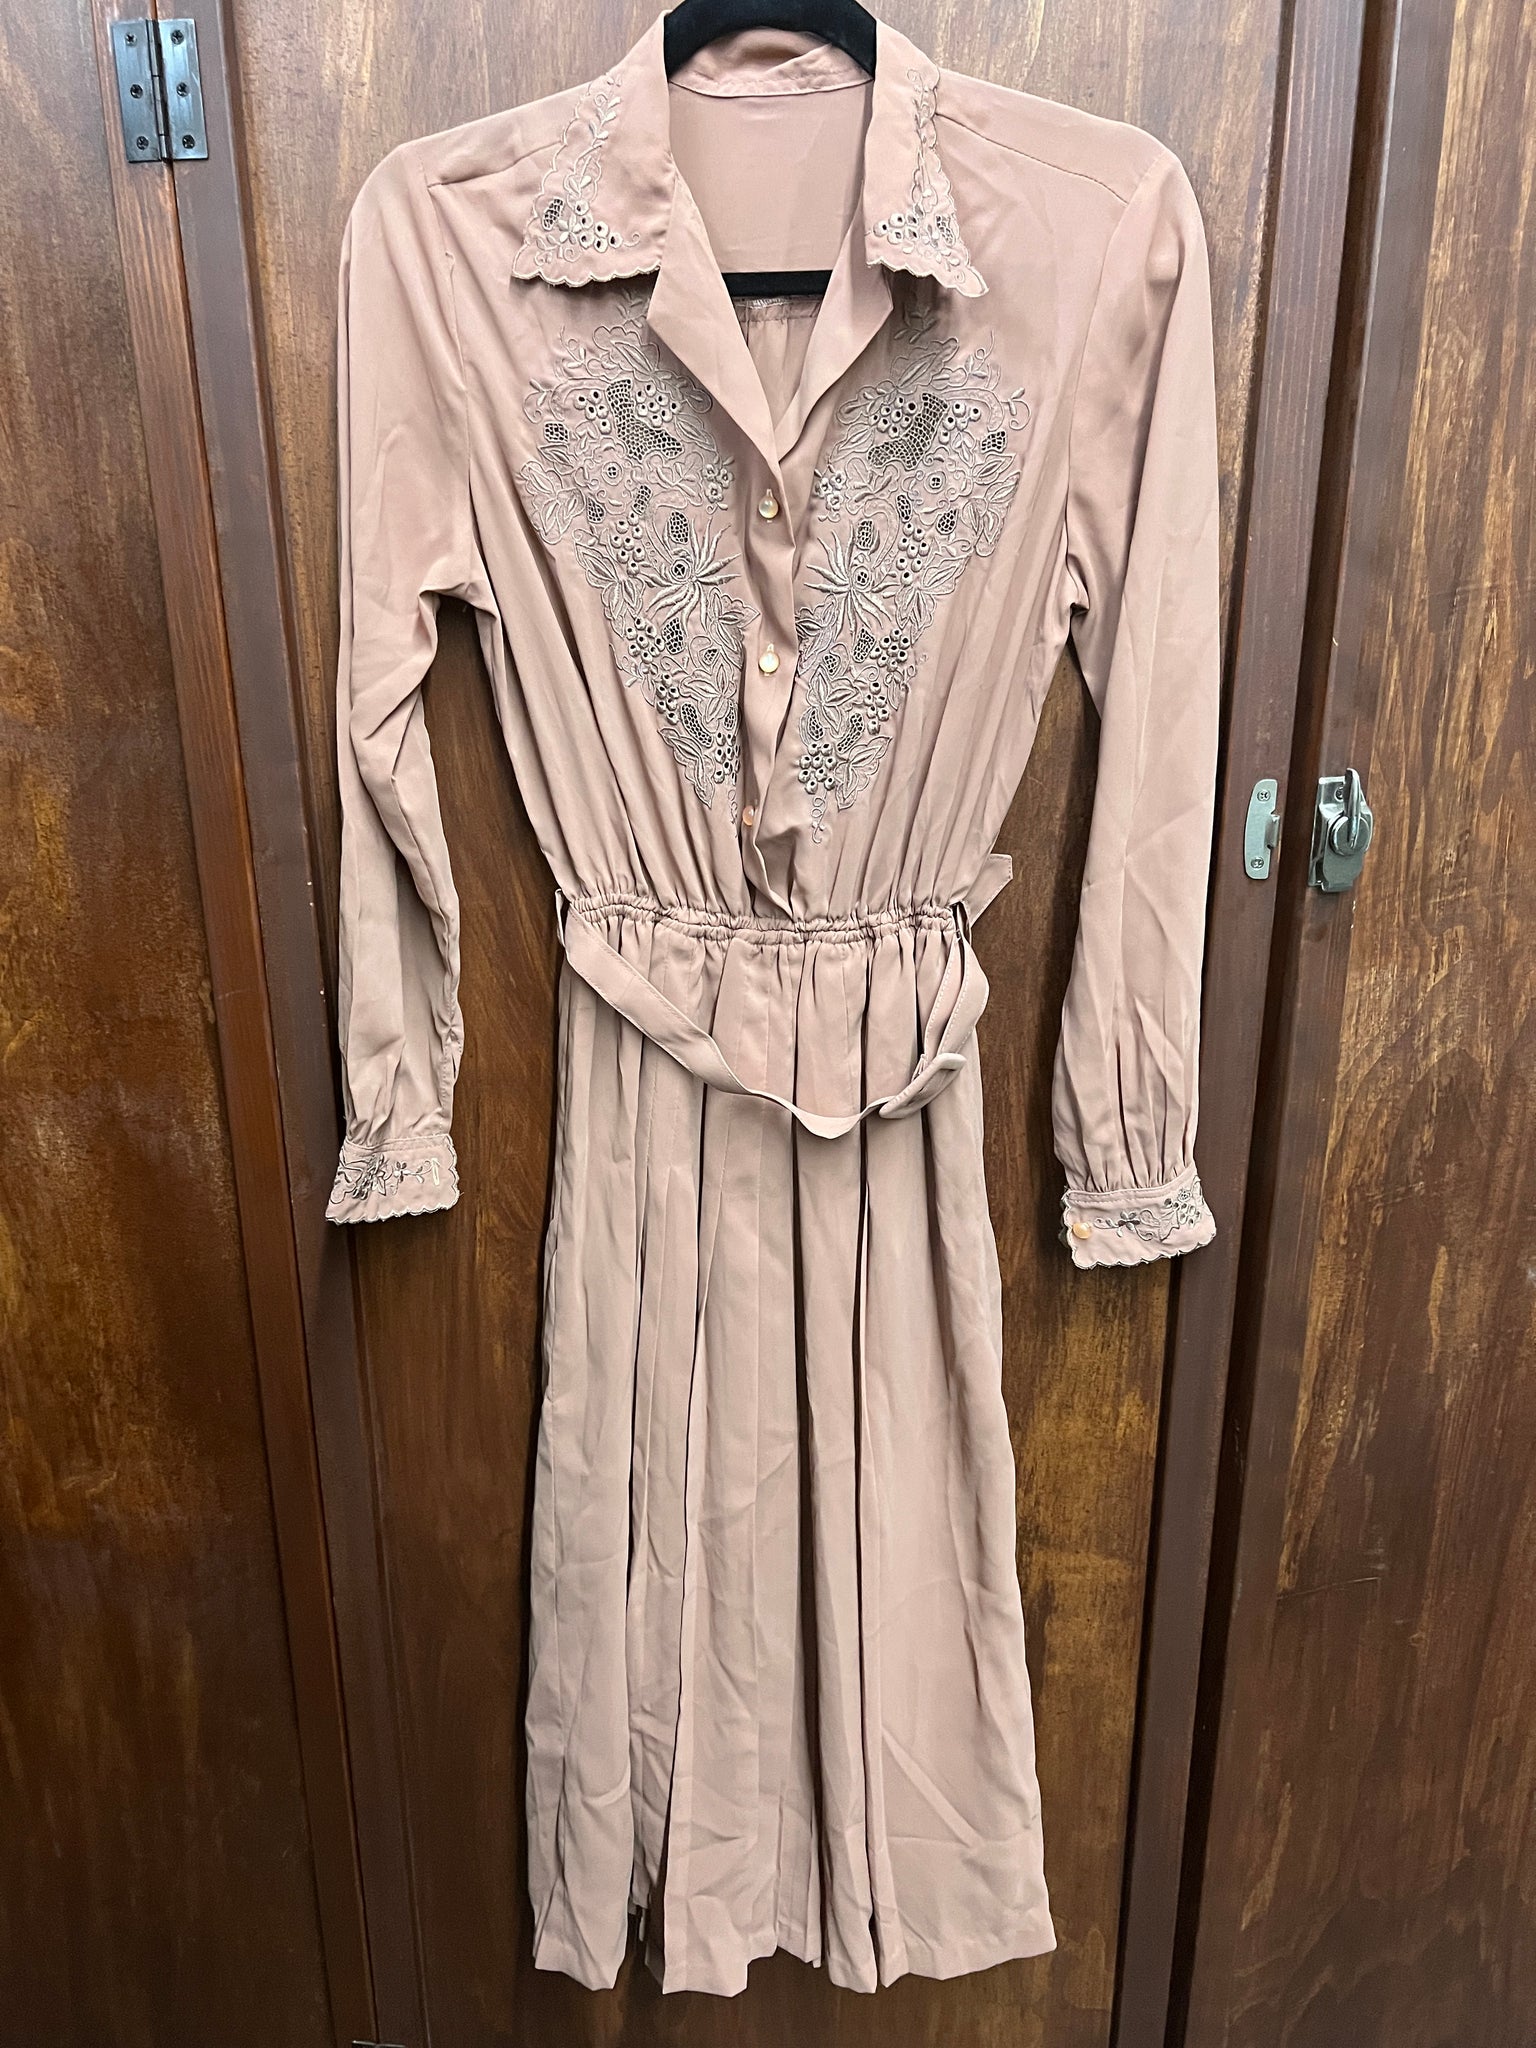 1970s -DRESS- mocha brown shirt front w/ lace cutouts l/s